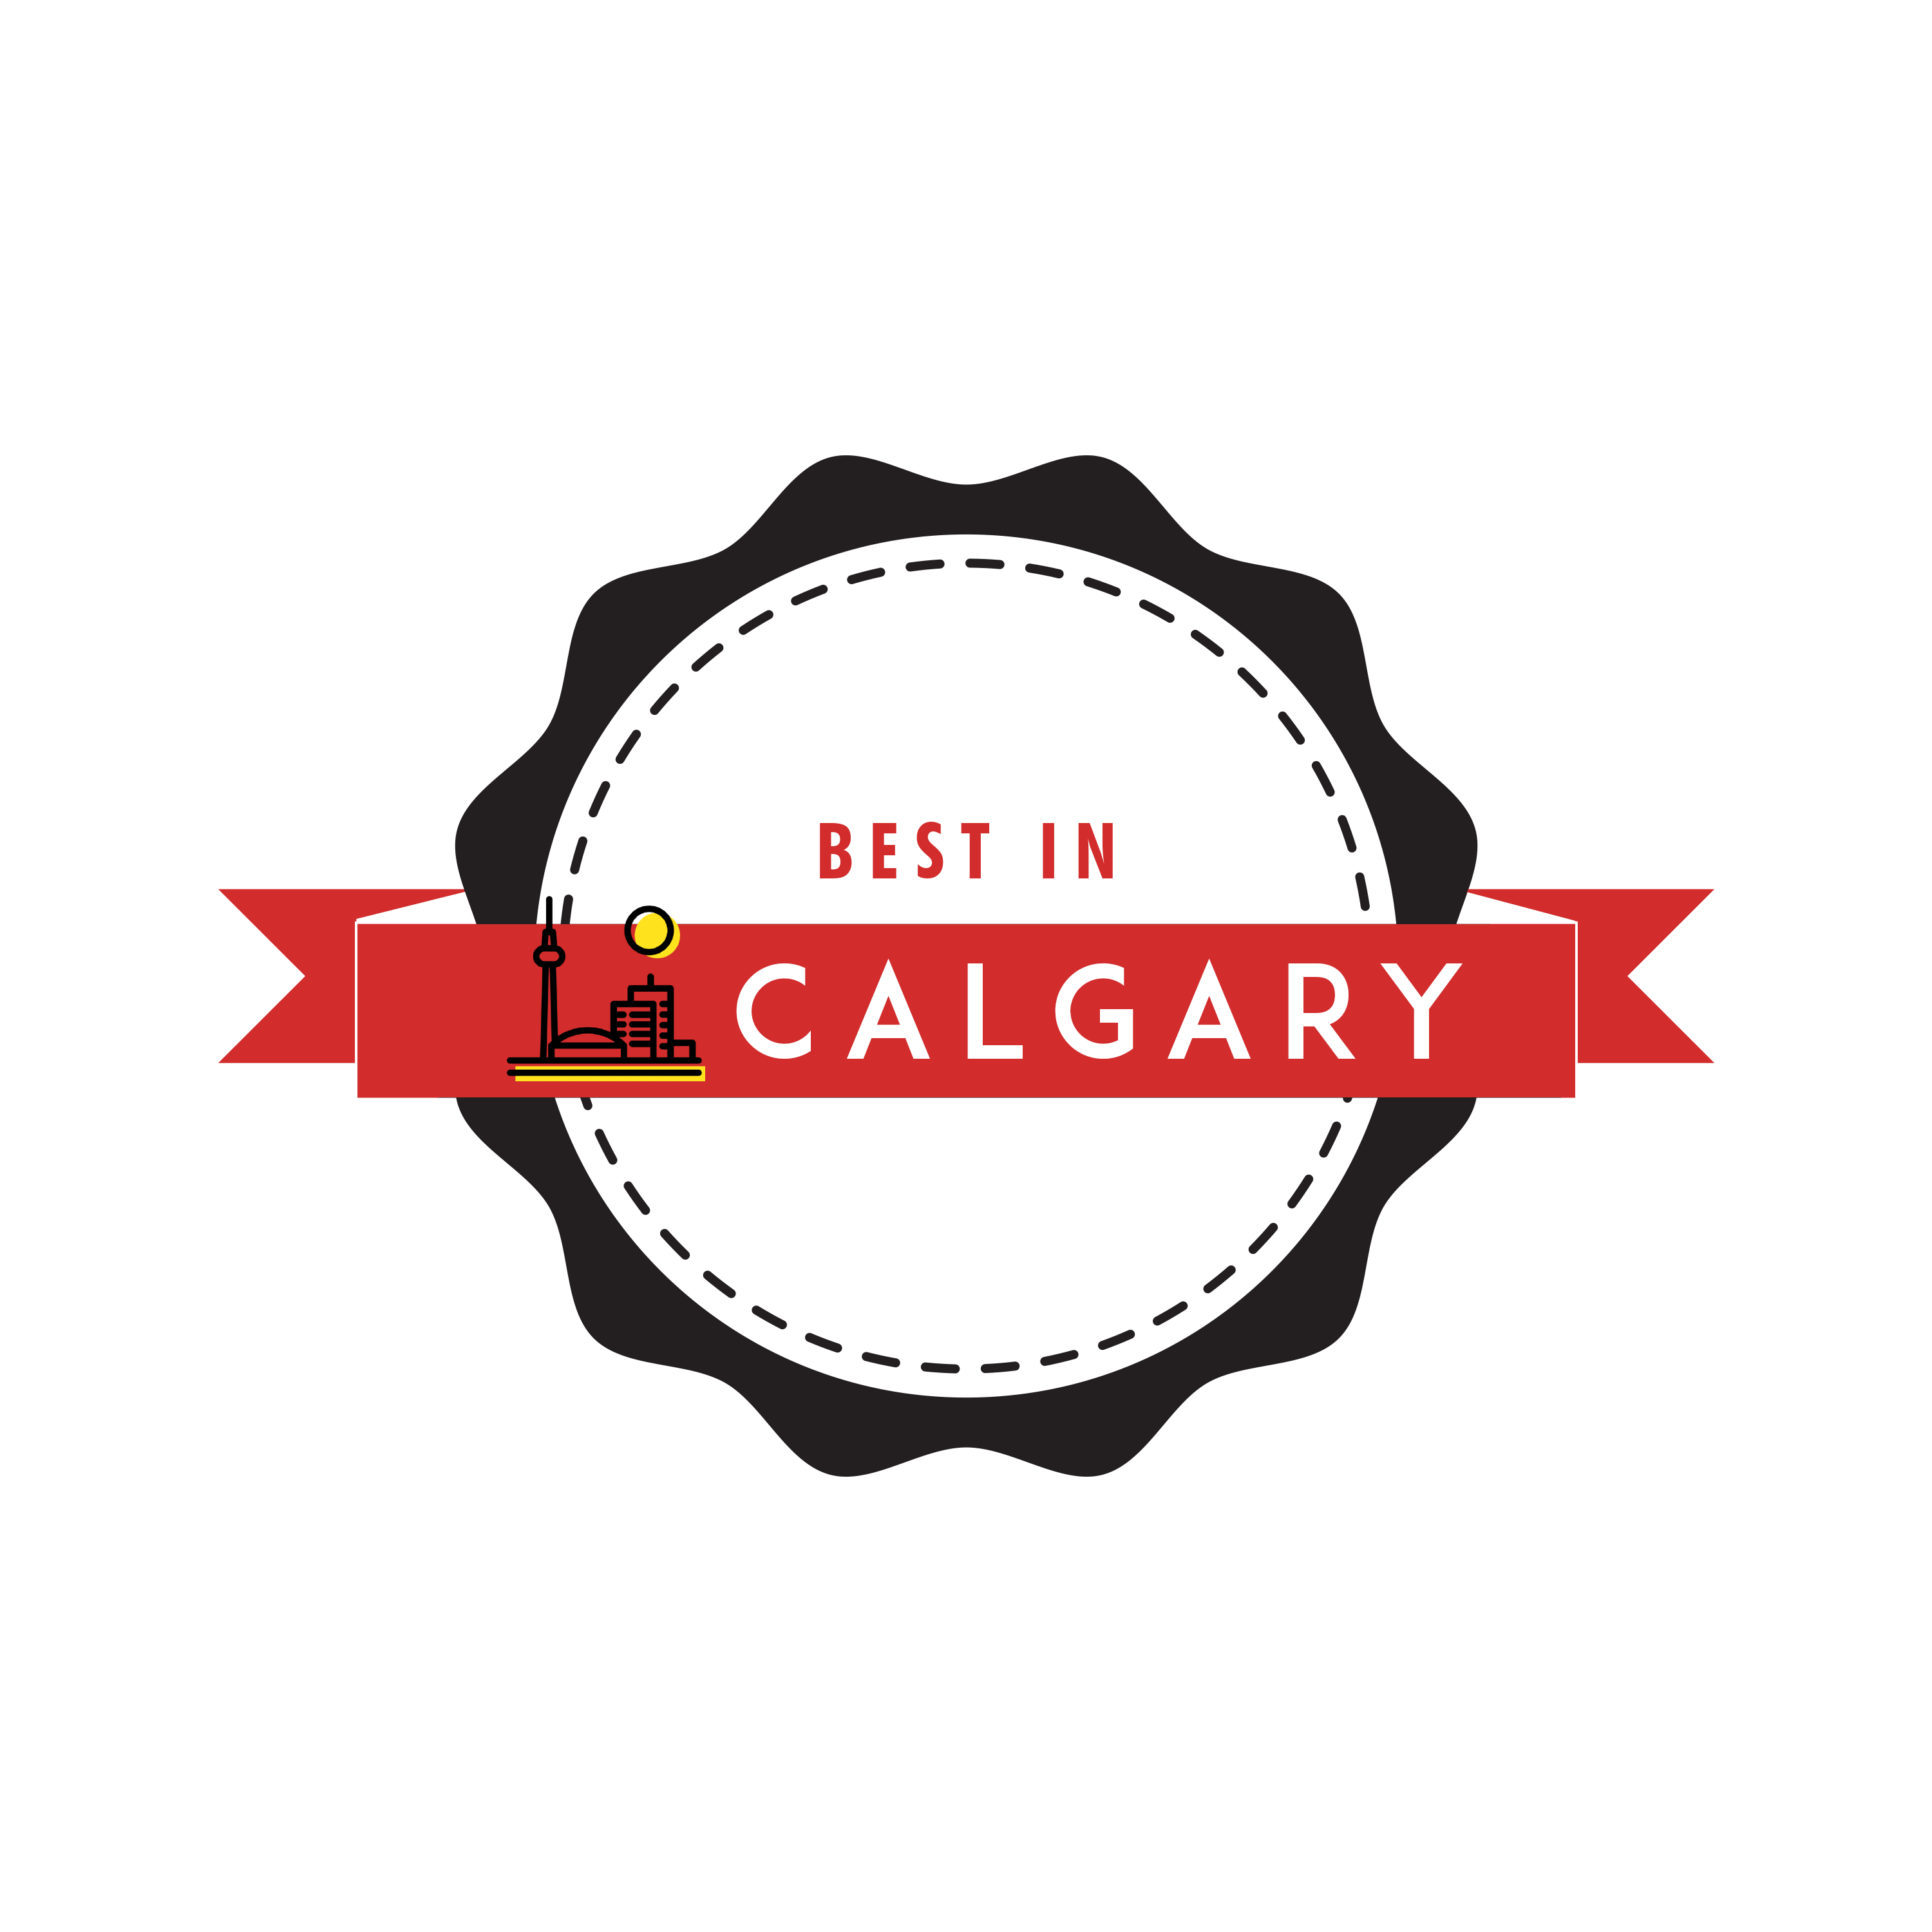 Best in Calgary Website Award